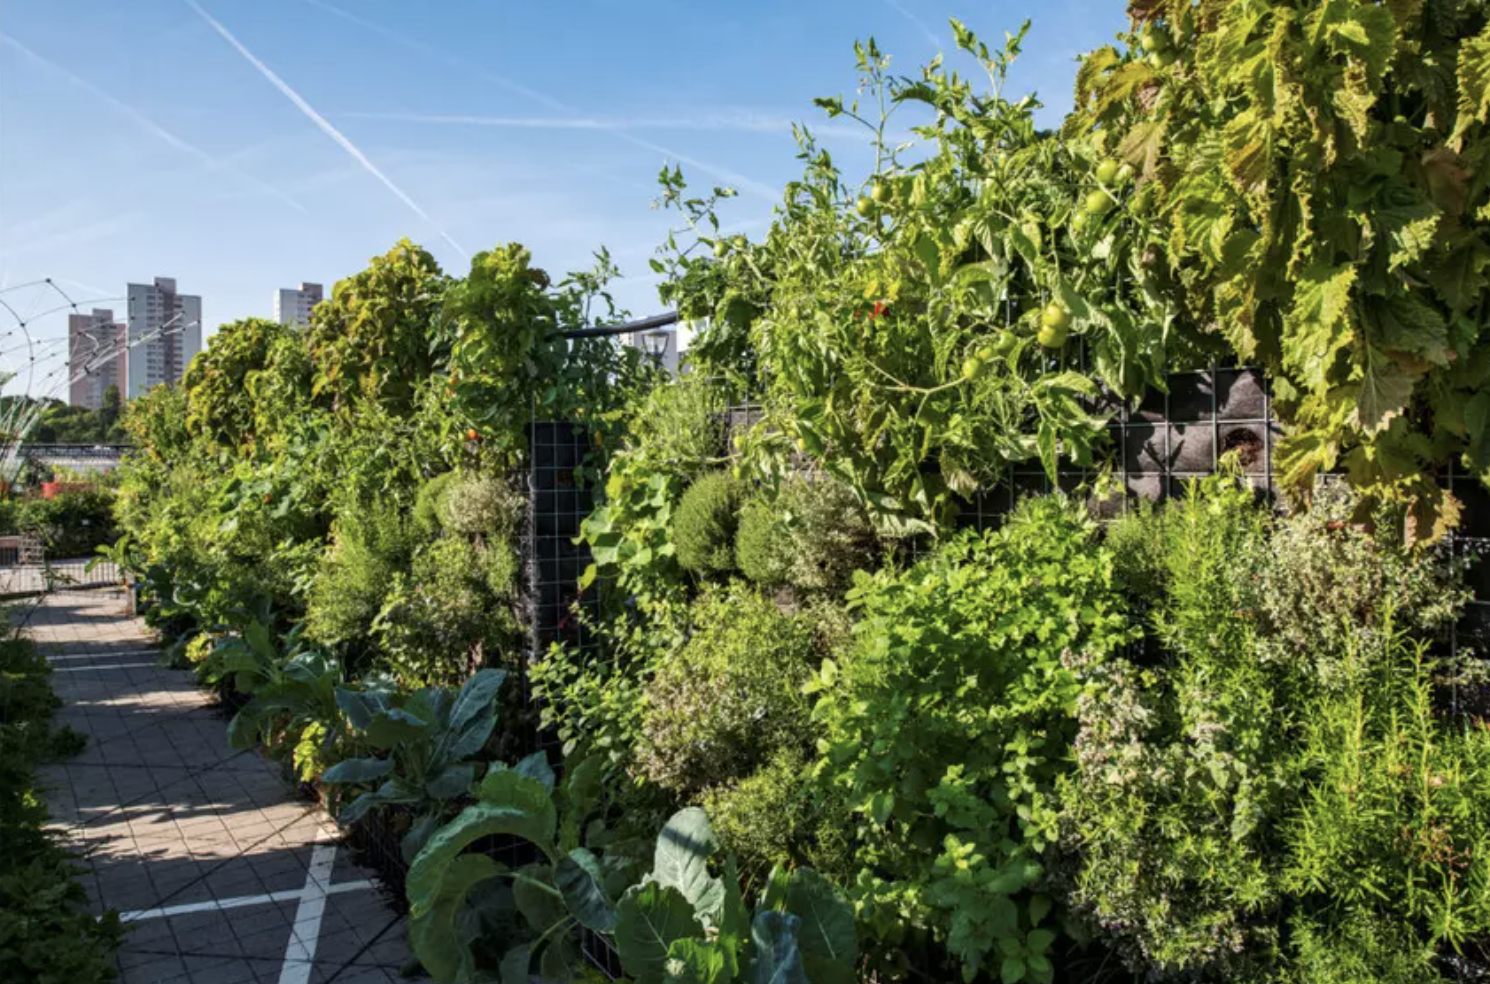 Garden of plenty: Crops ready to pick at a Peas&amp;Love urban farm near Paris; Image: Peas&amp;Love